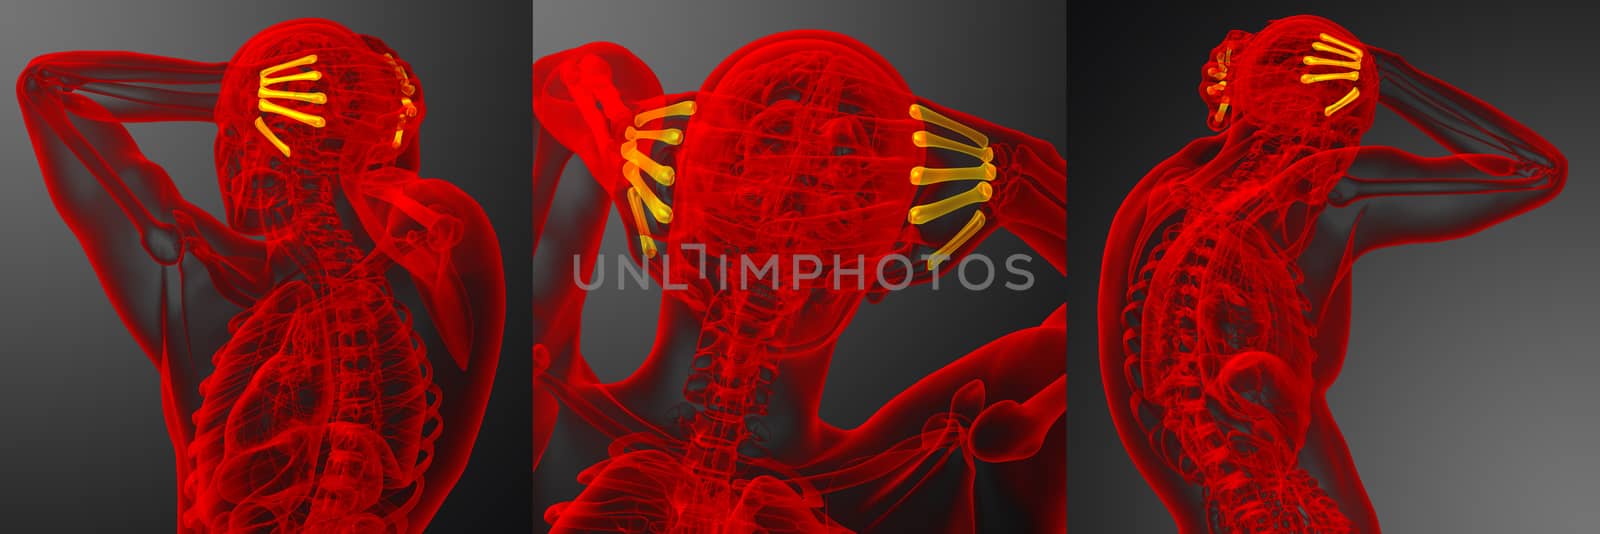 3d rendering medical illustration of the metacarpal bone